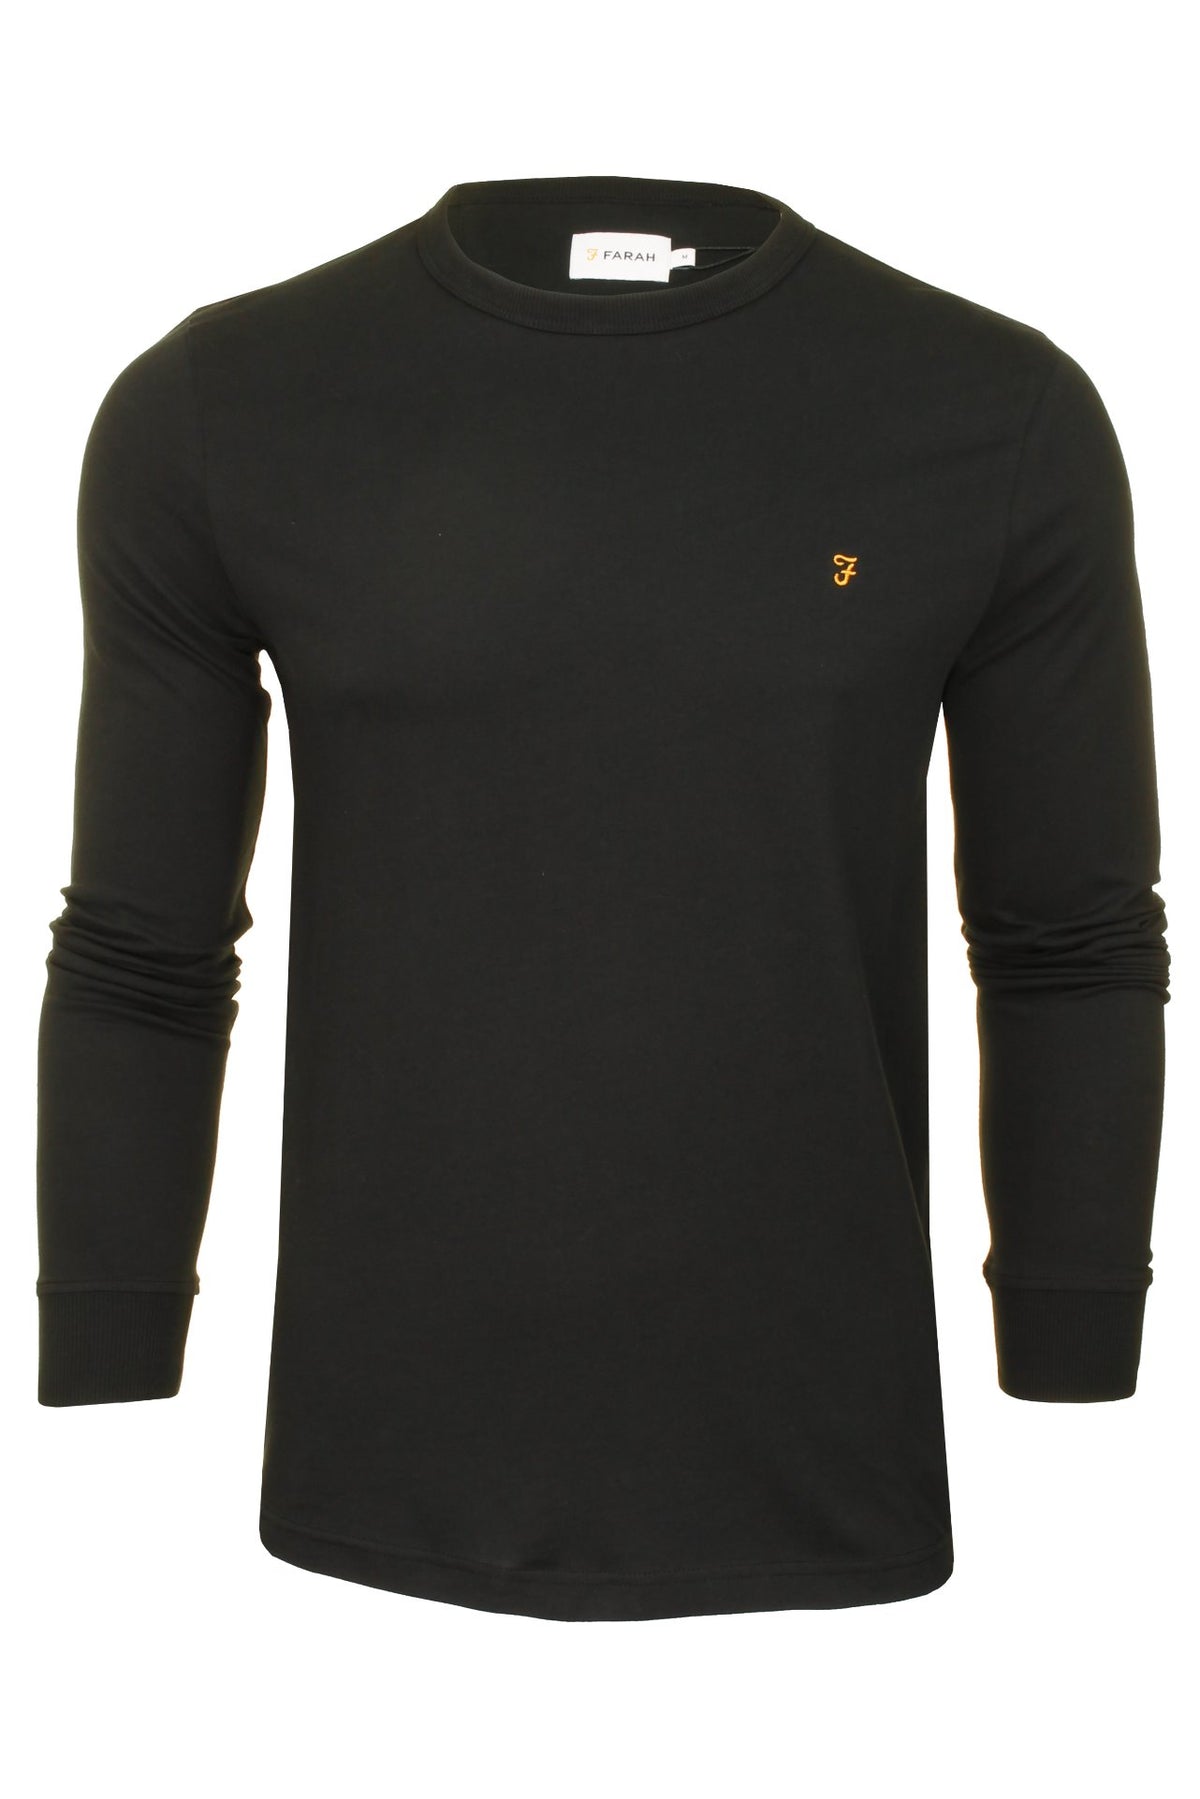 Farah Mens 'Wothington' T-Shirt - Long Sleeved, 01, F4Ksb057, Black